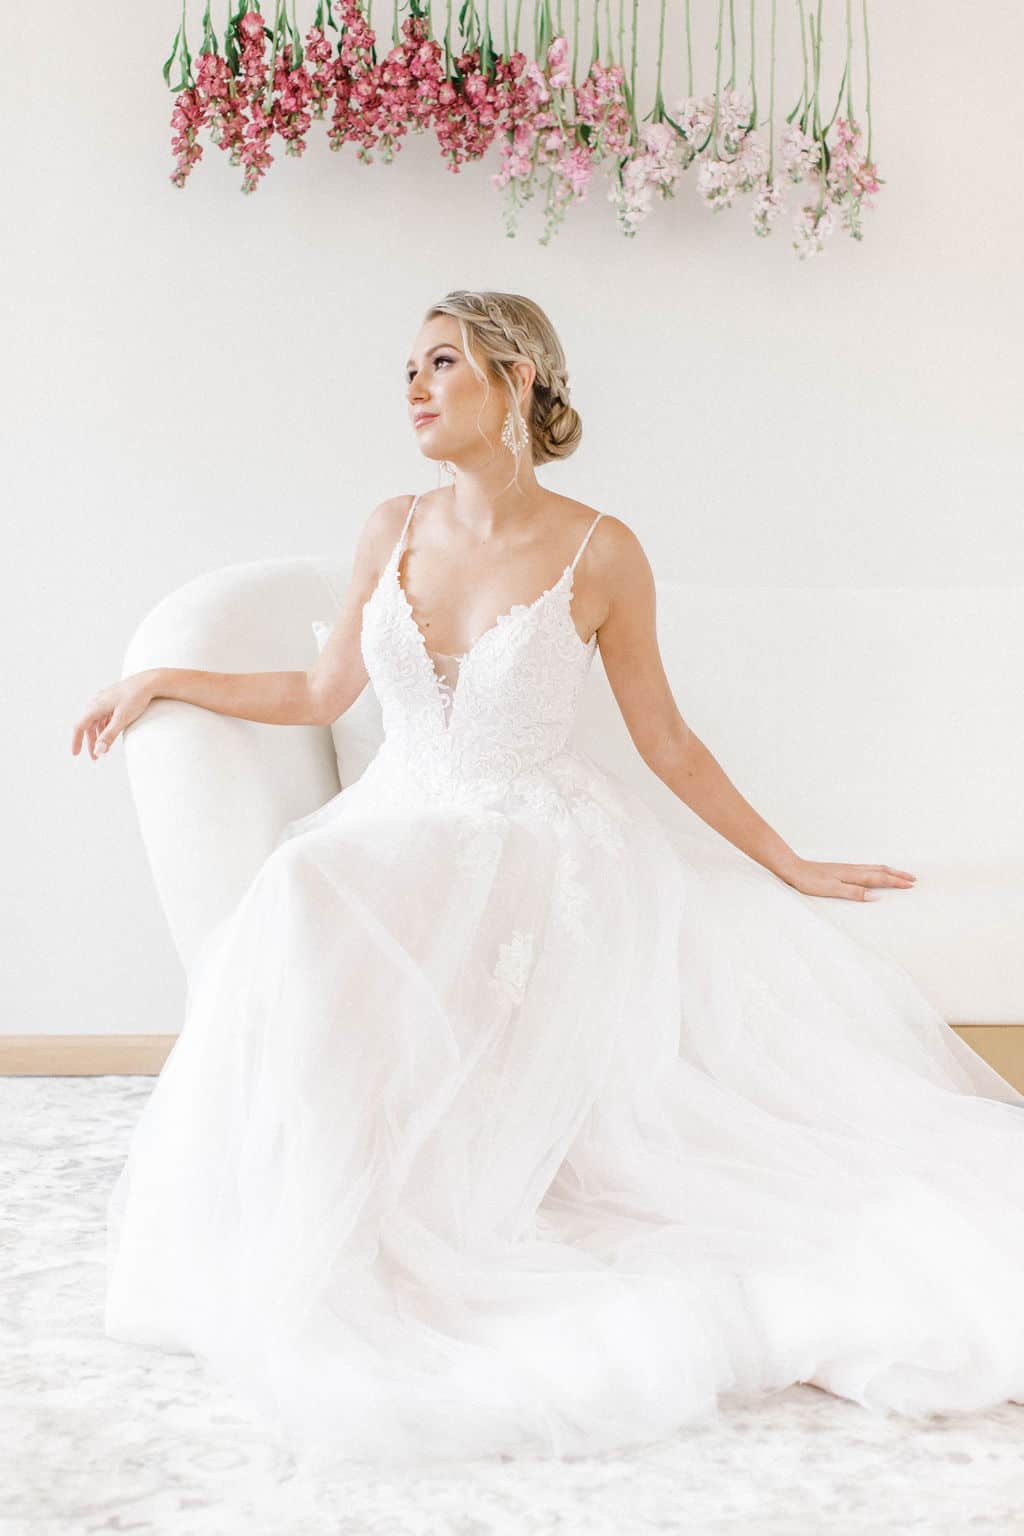 Where to rent a wedding dress – Bridal rental options